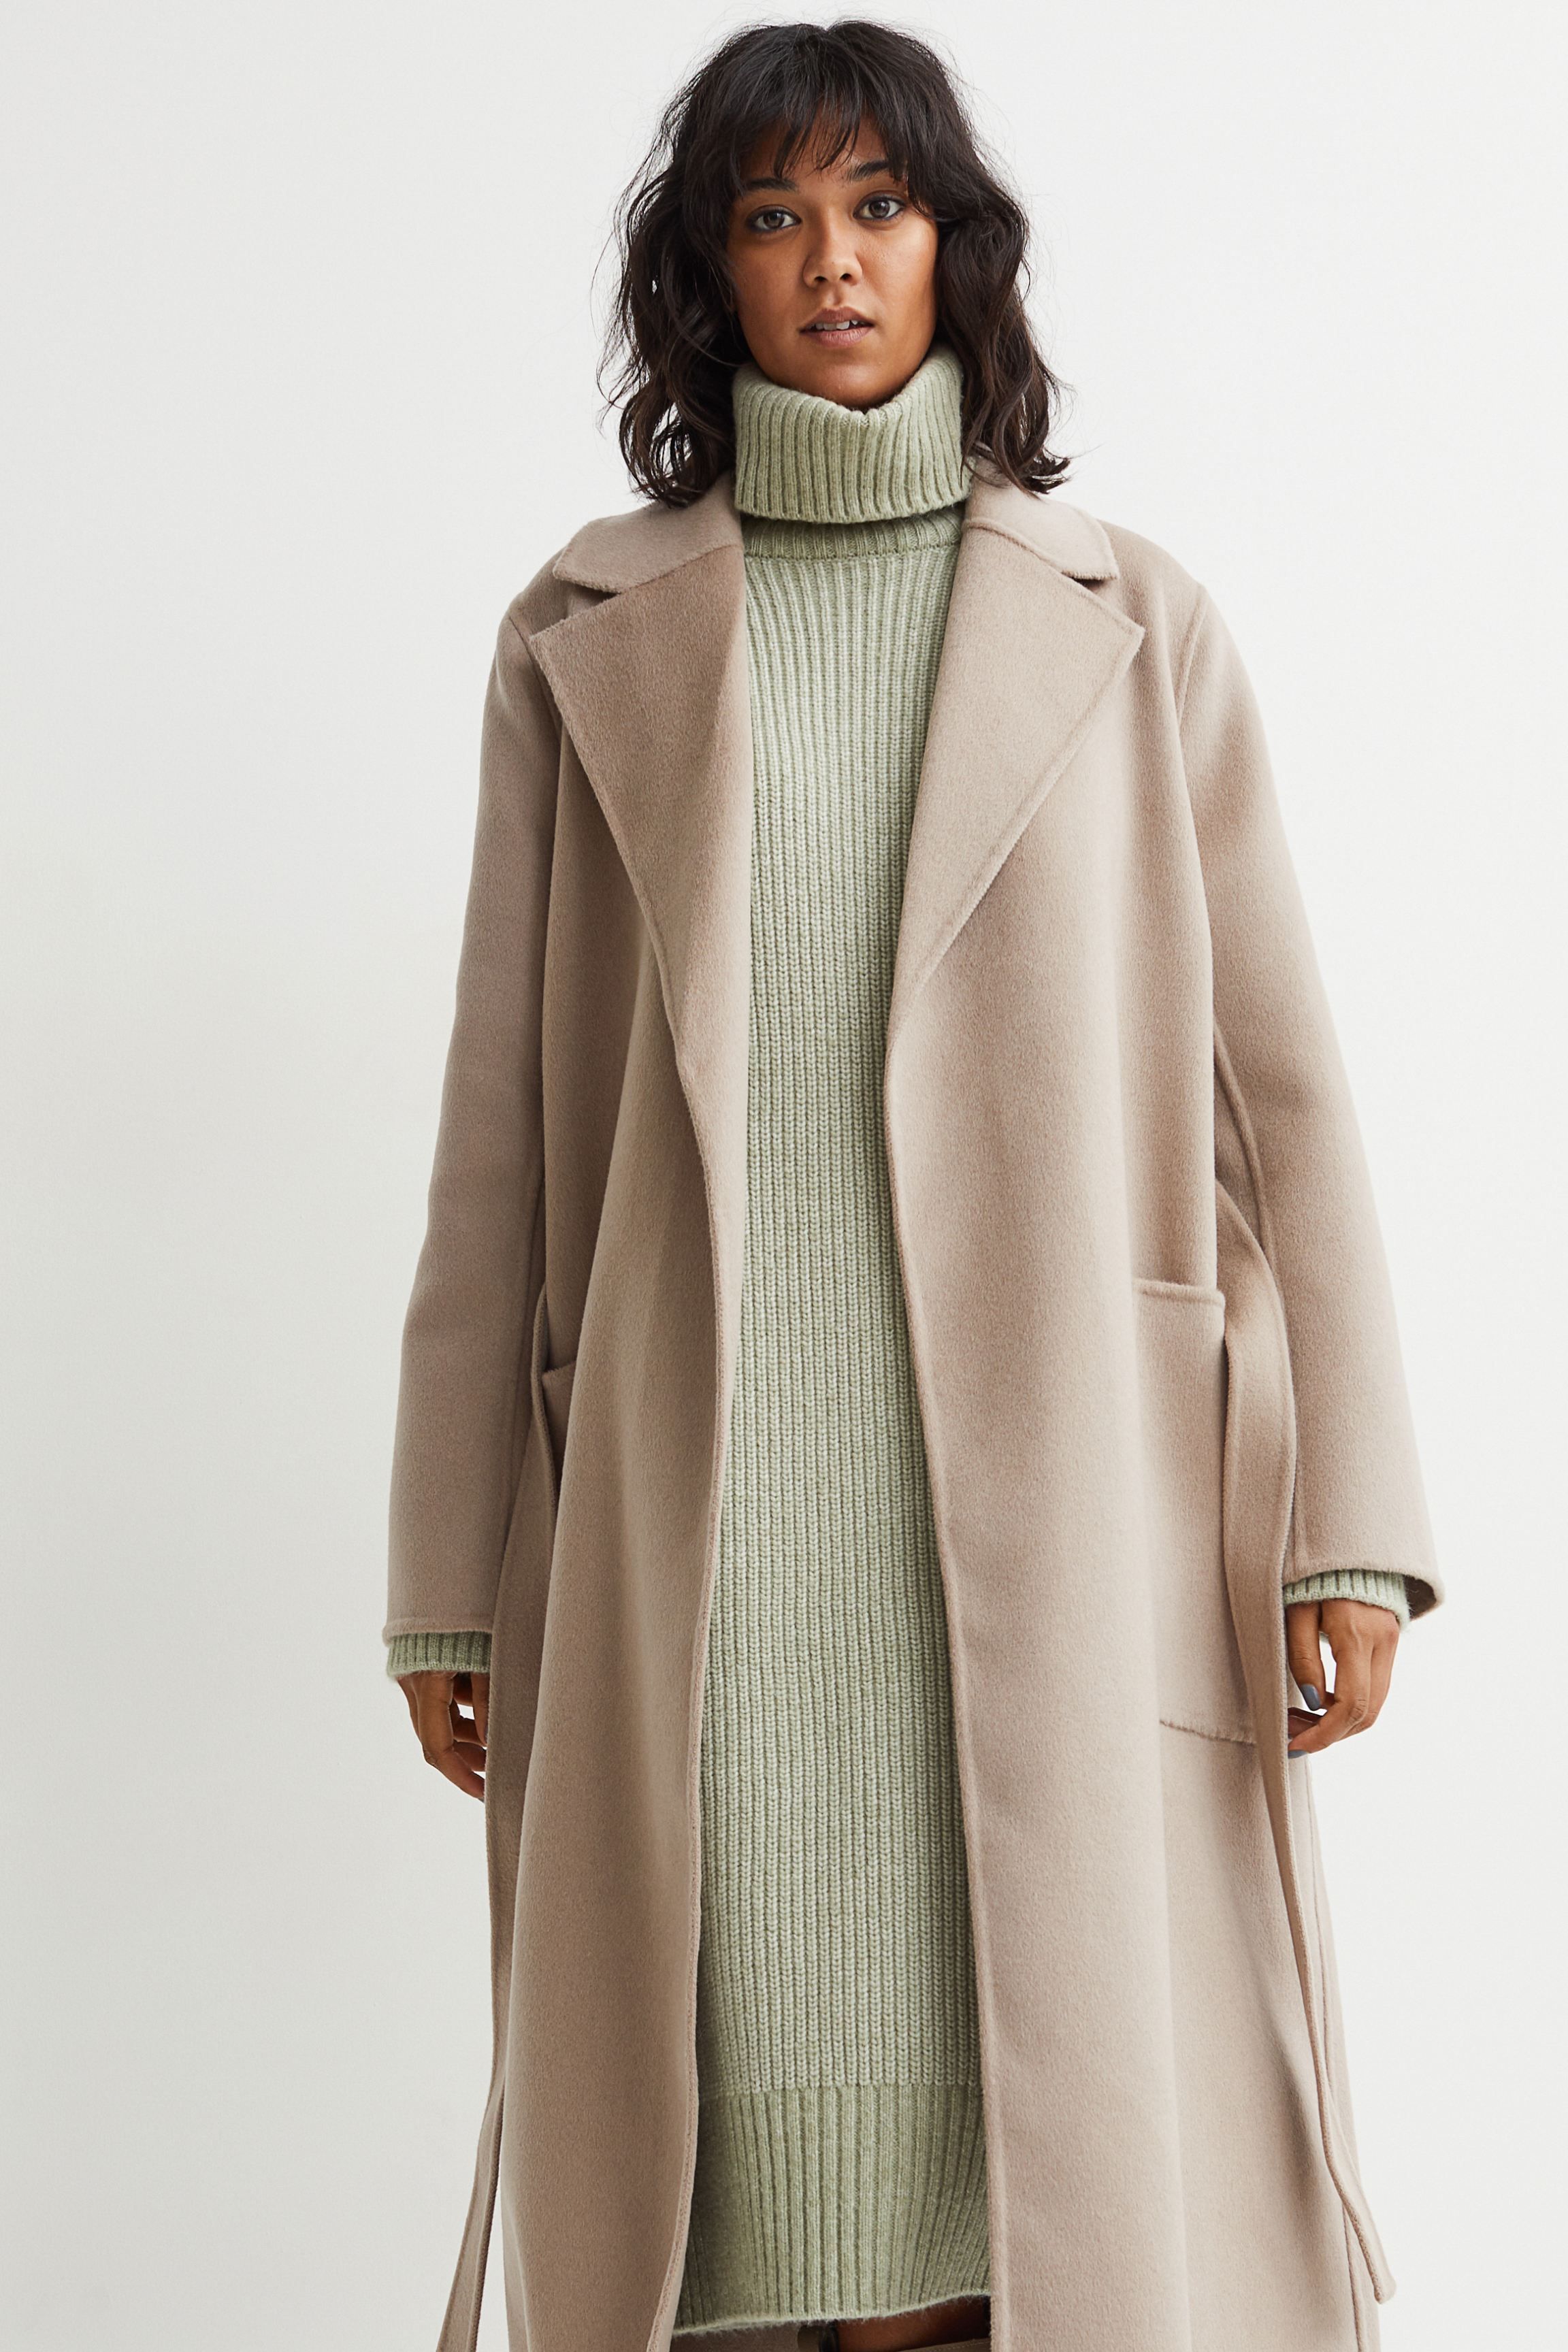 20 Best Winter Coats for Women 2021 